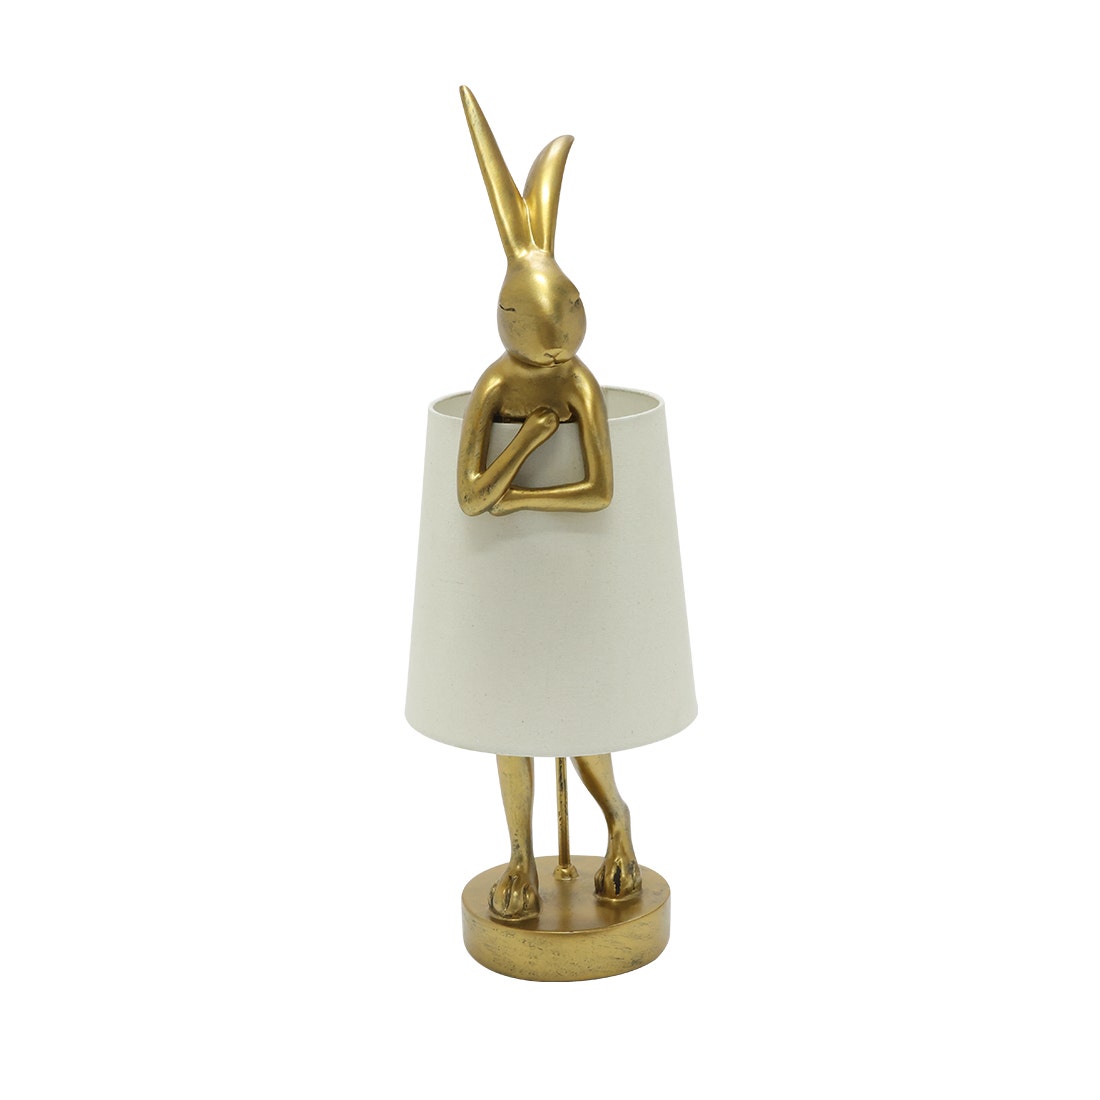 KD TABEL LAMP #61598 RABBIT GOLD / WHITE